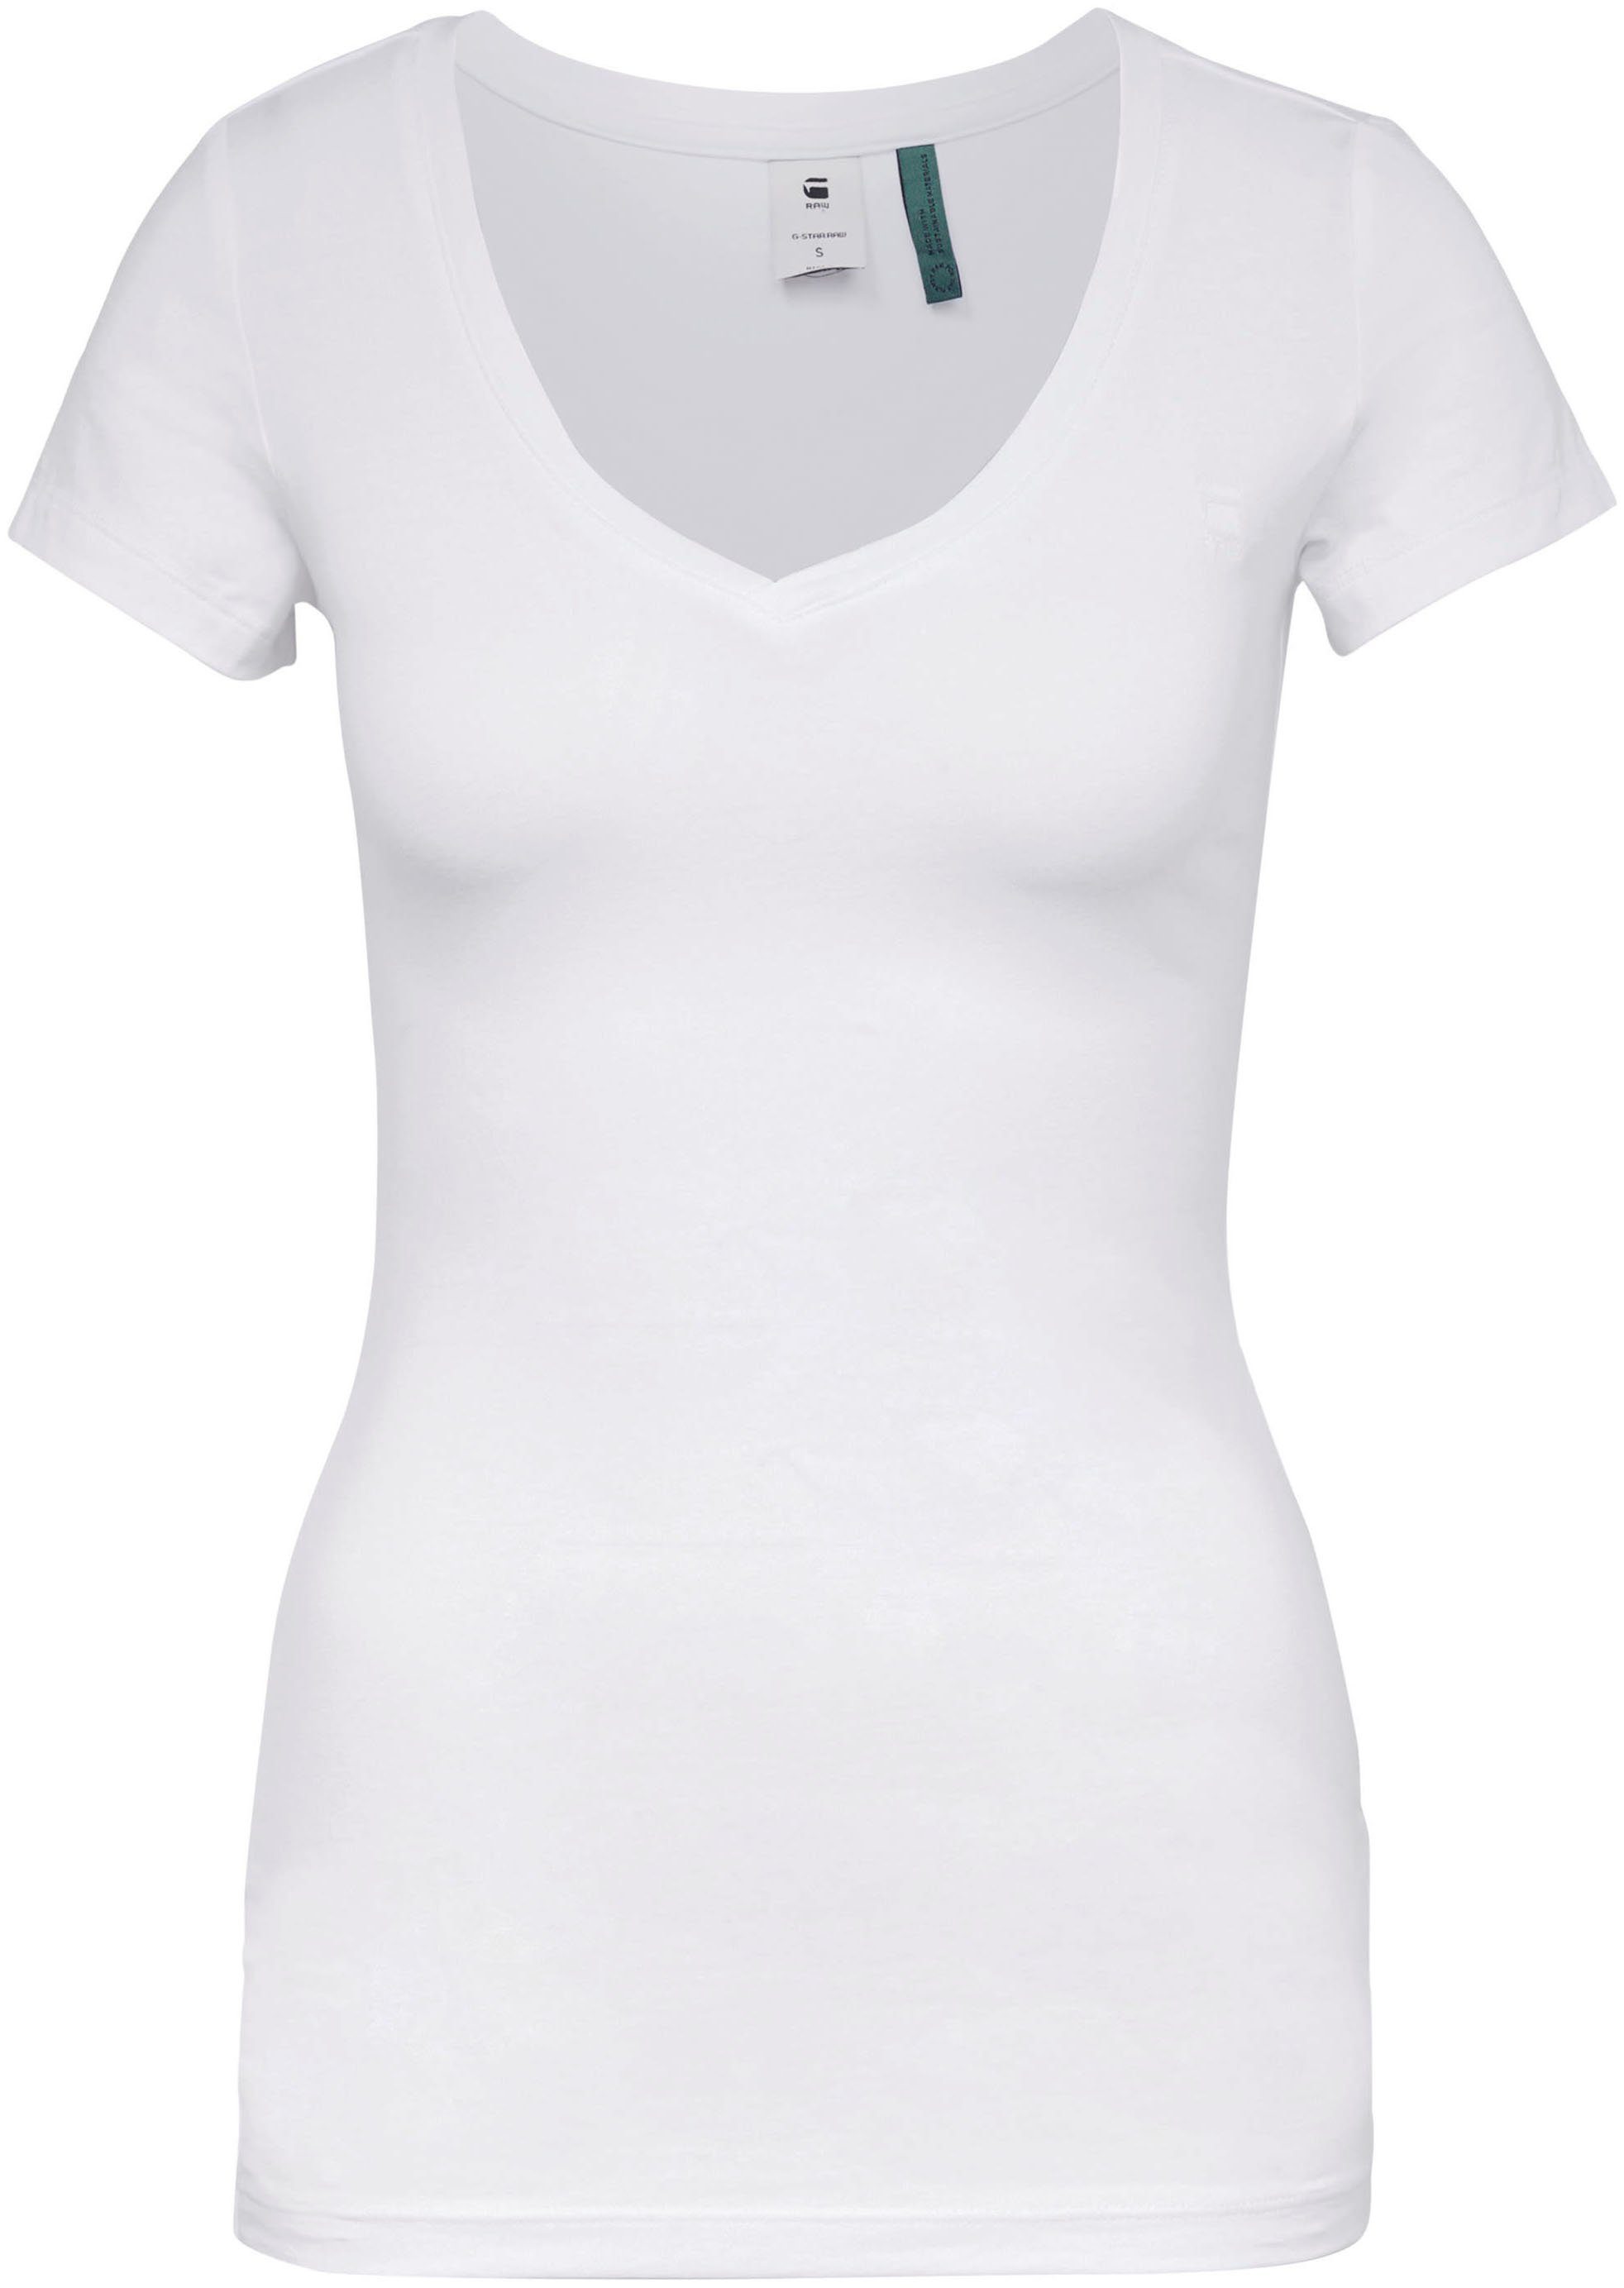 G-Star RAW Logodruck V-Shirt t v sl wmn mit Base kleinem cap vorne white